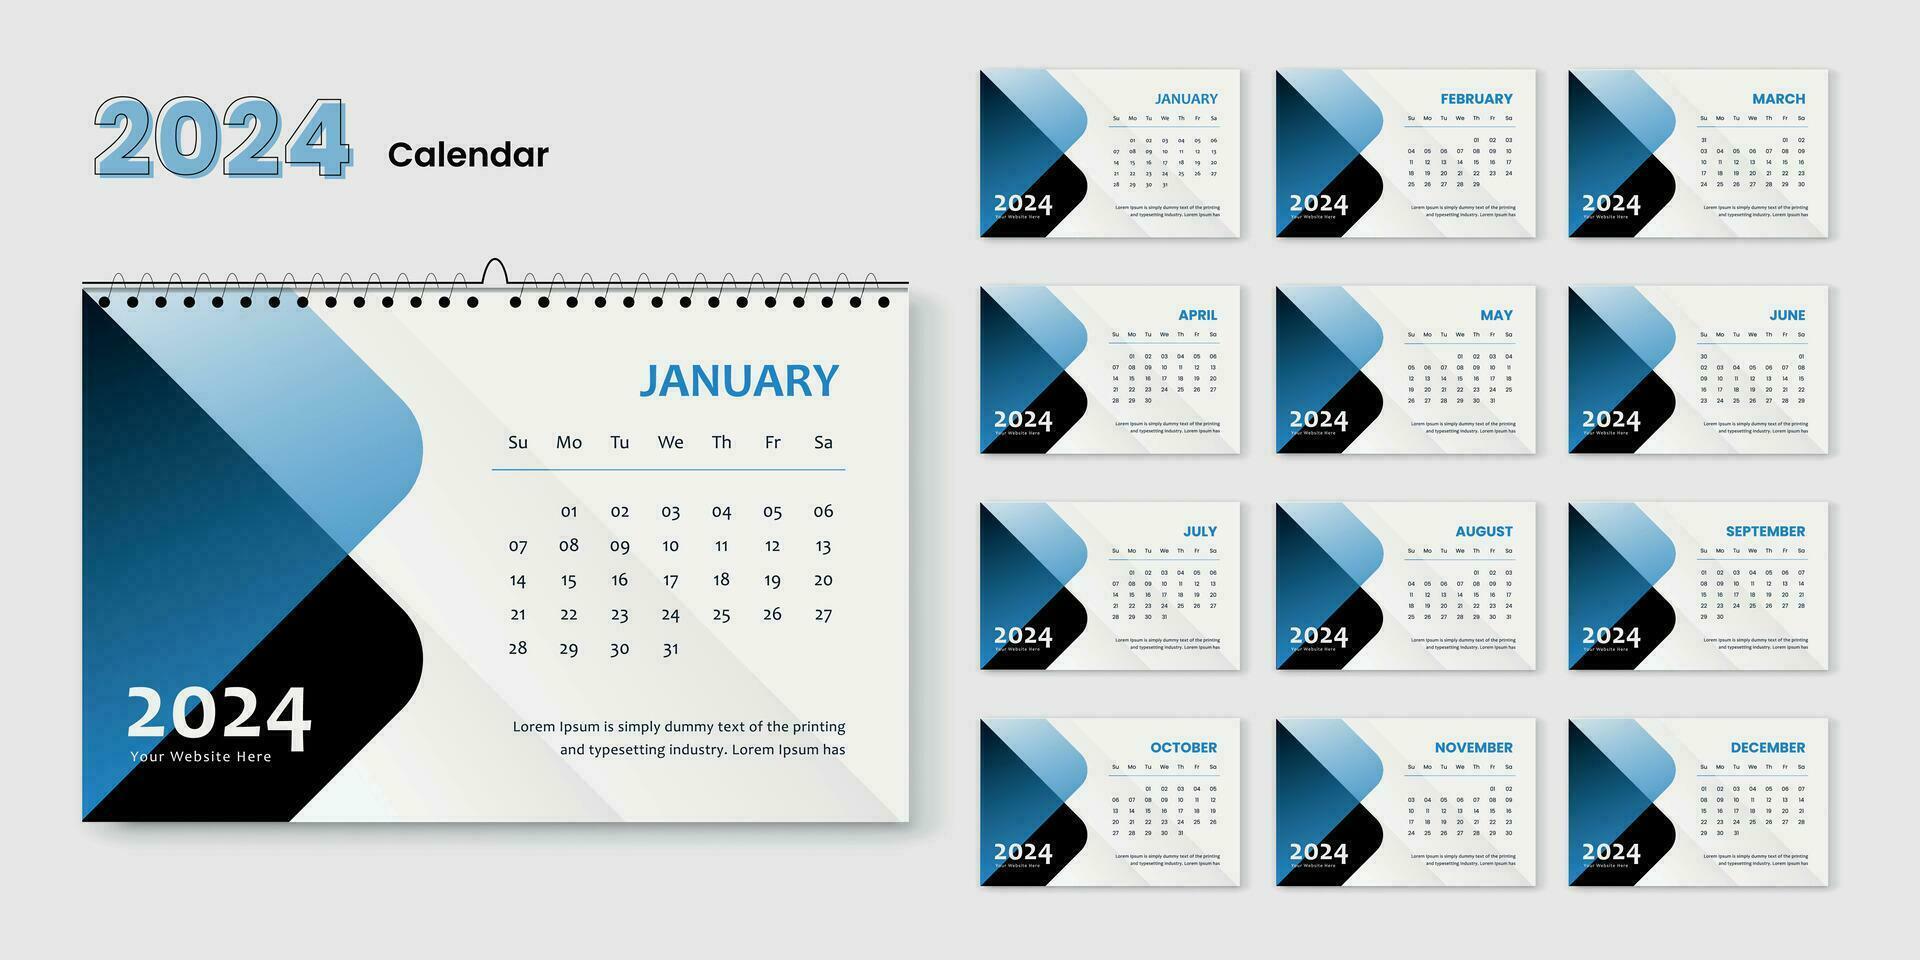 Happy New Year 2024 Calendar Design  Modern Template, Wall and Desk Calendar Design vector